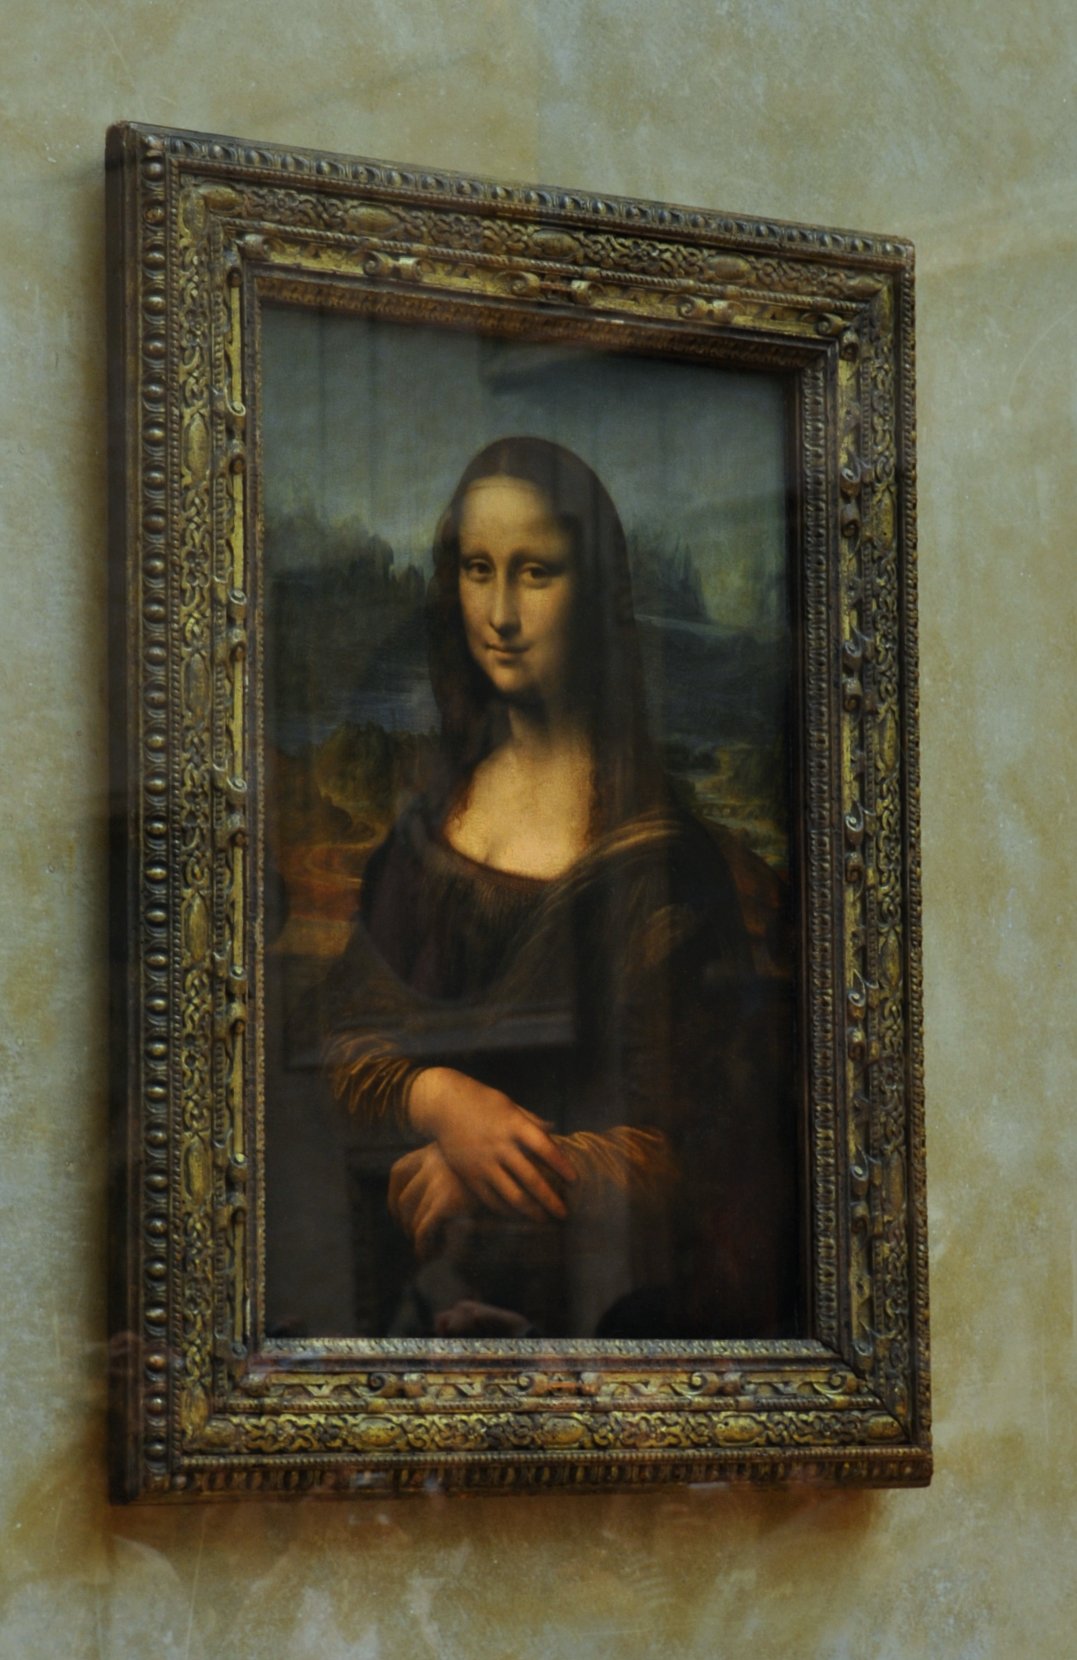 The famous Mona Lisa painting by Leonardo Davinci